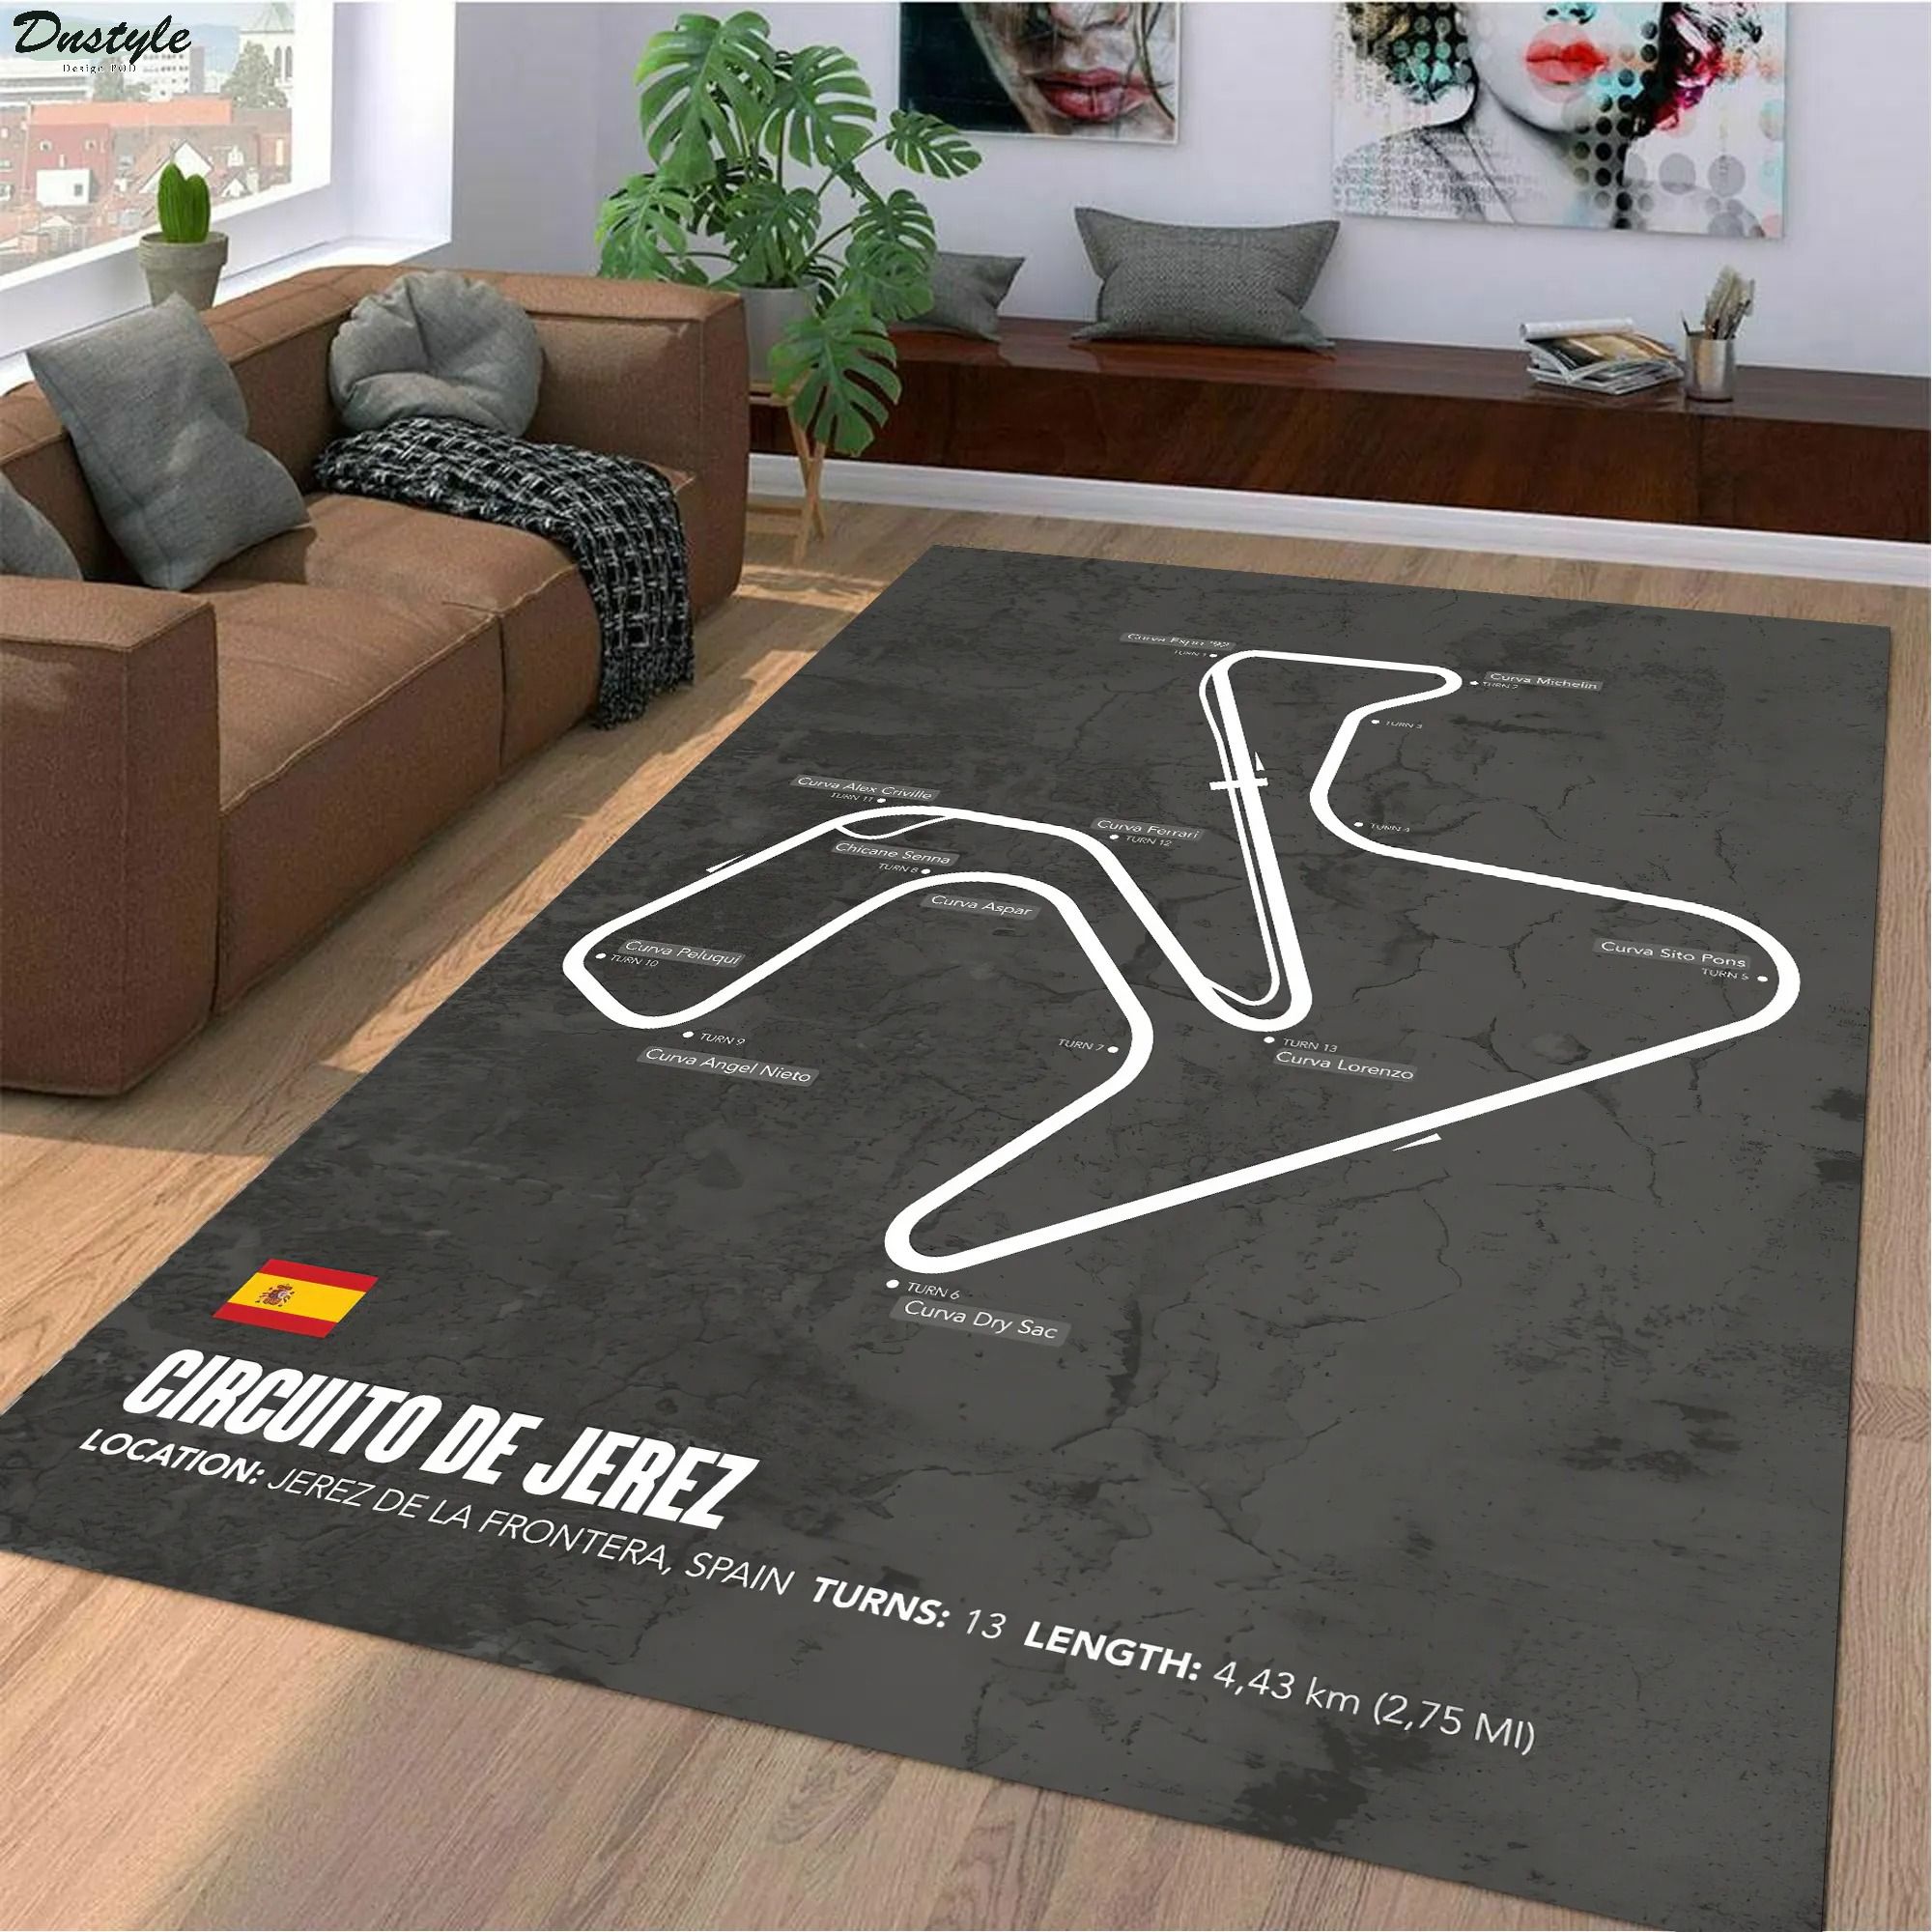 Circuit de jerez f1 track rug